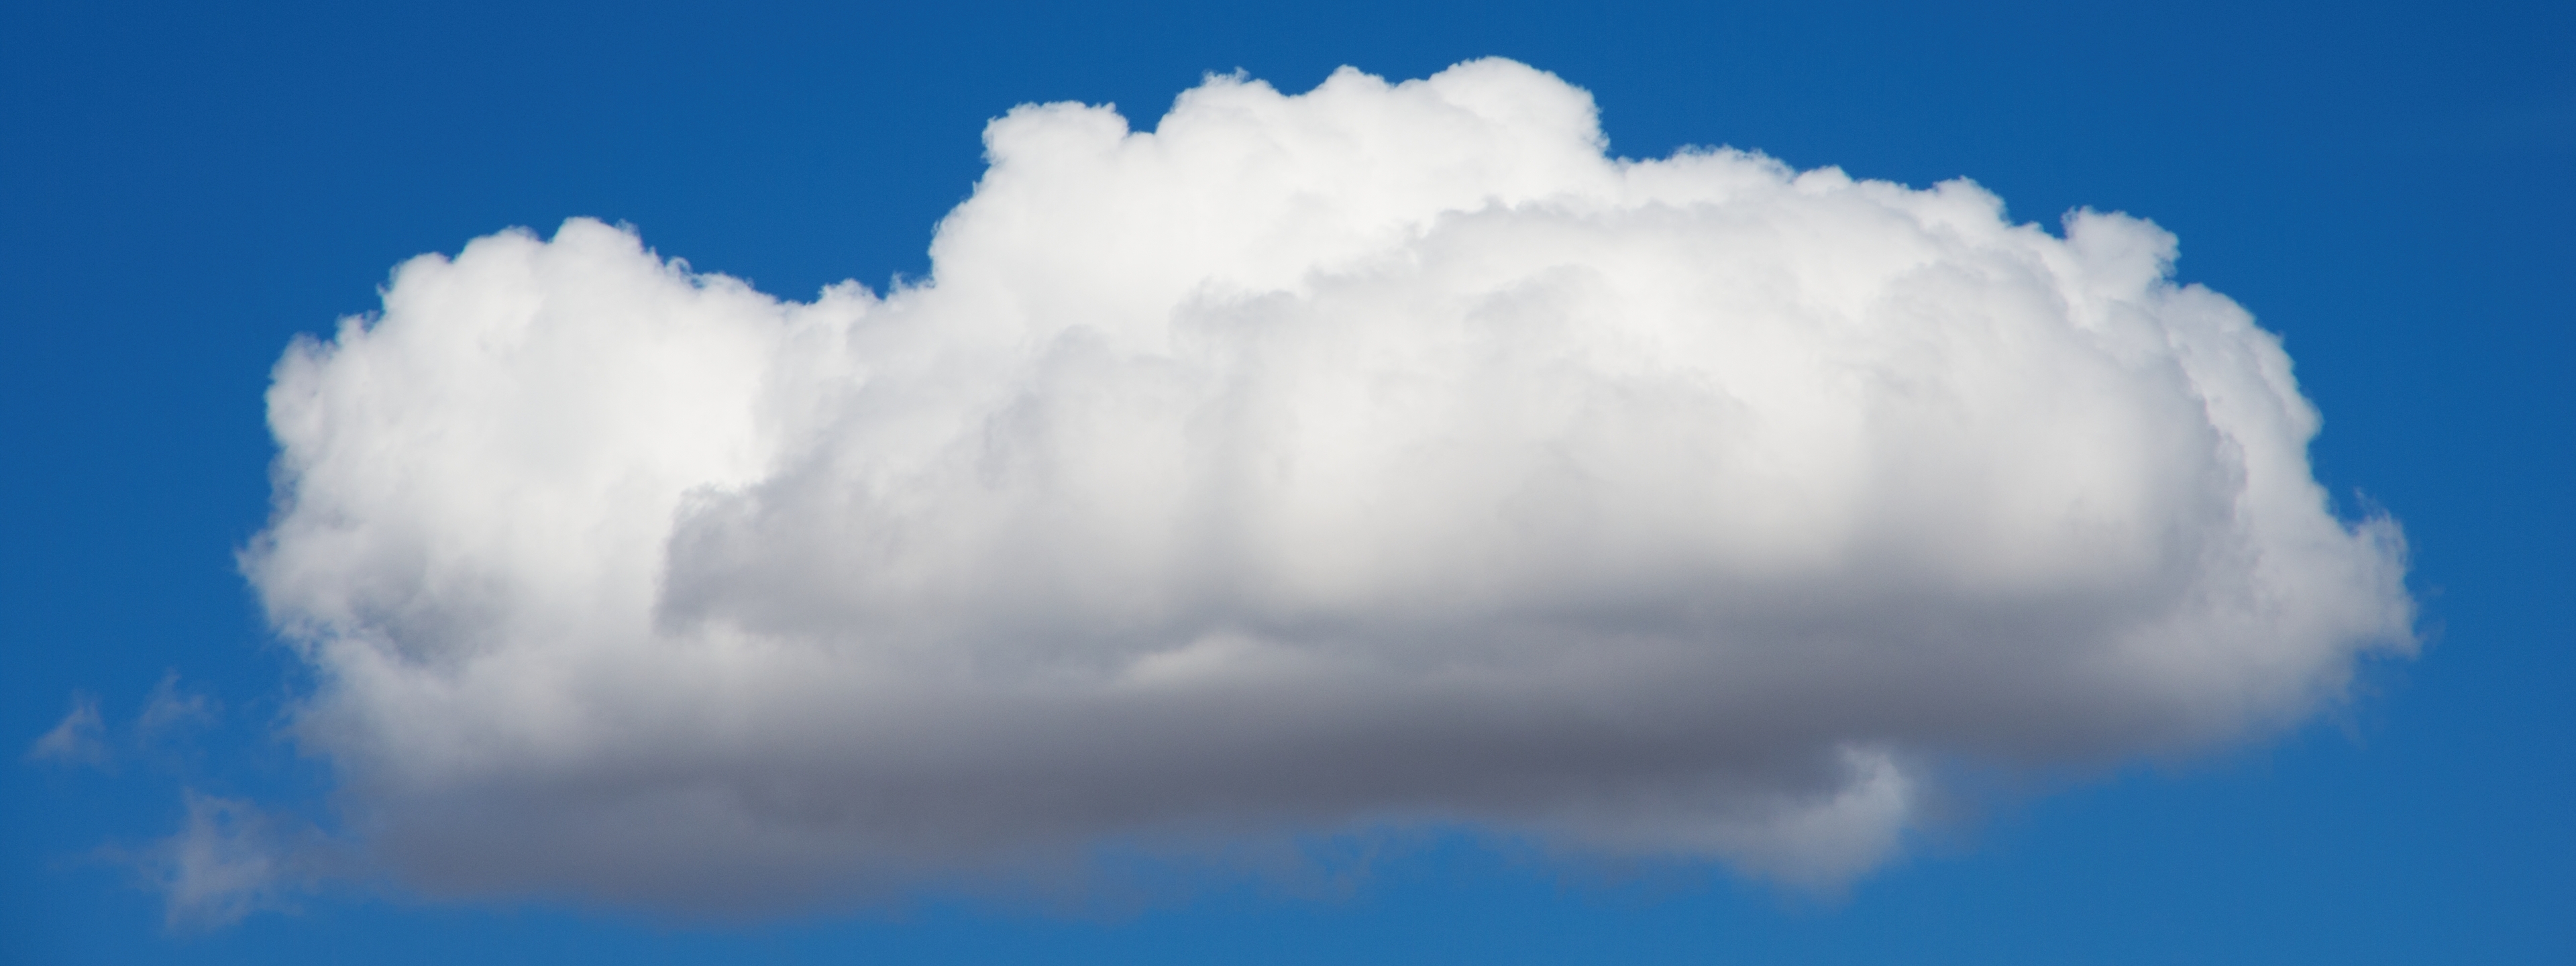 Fluffy cloud in a sunny blue sky